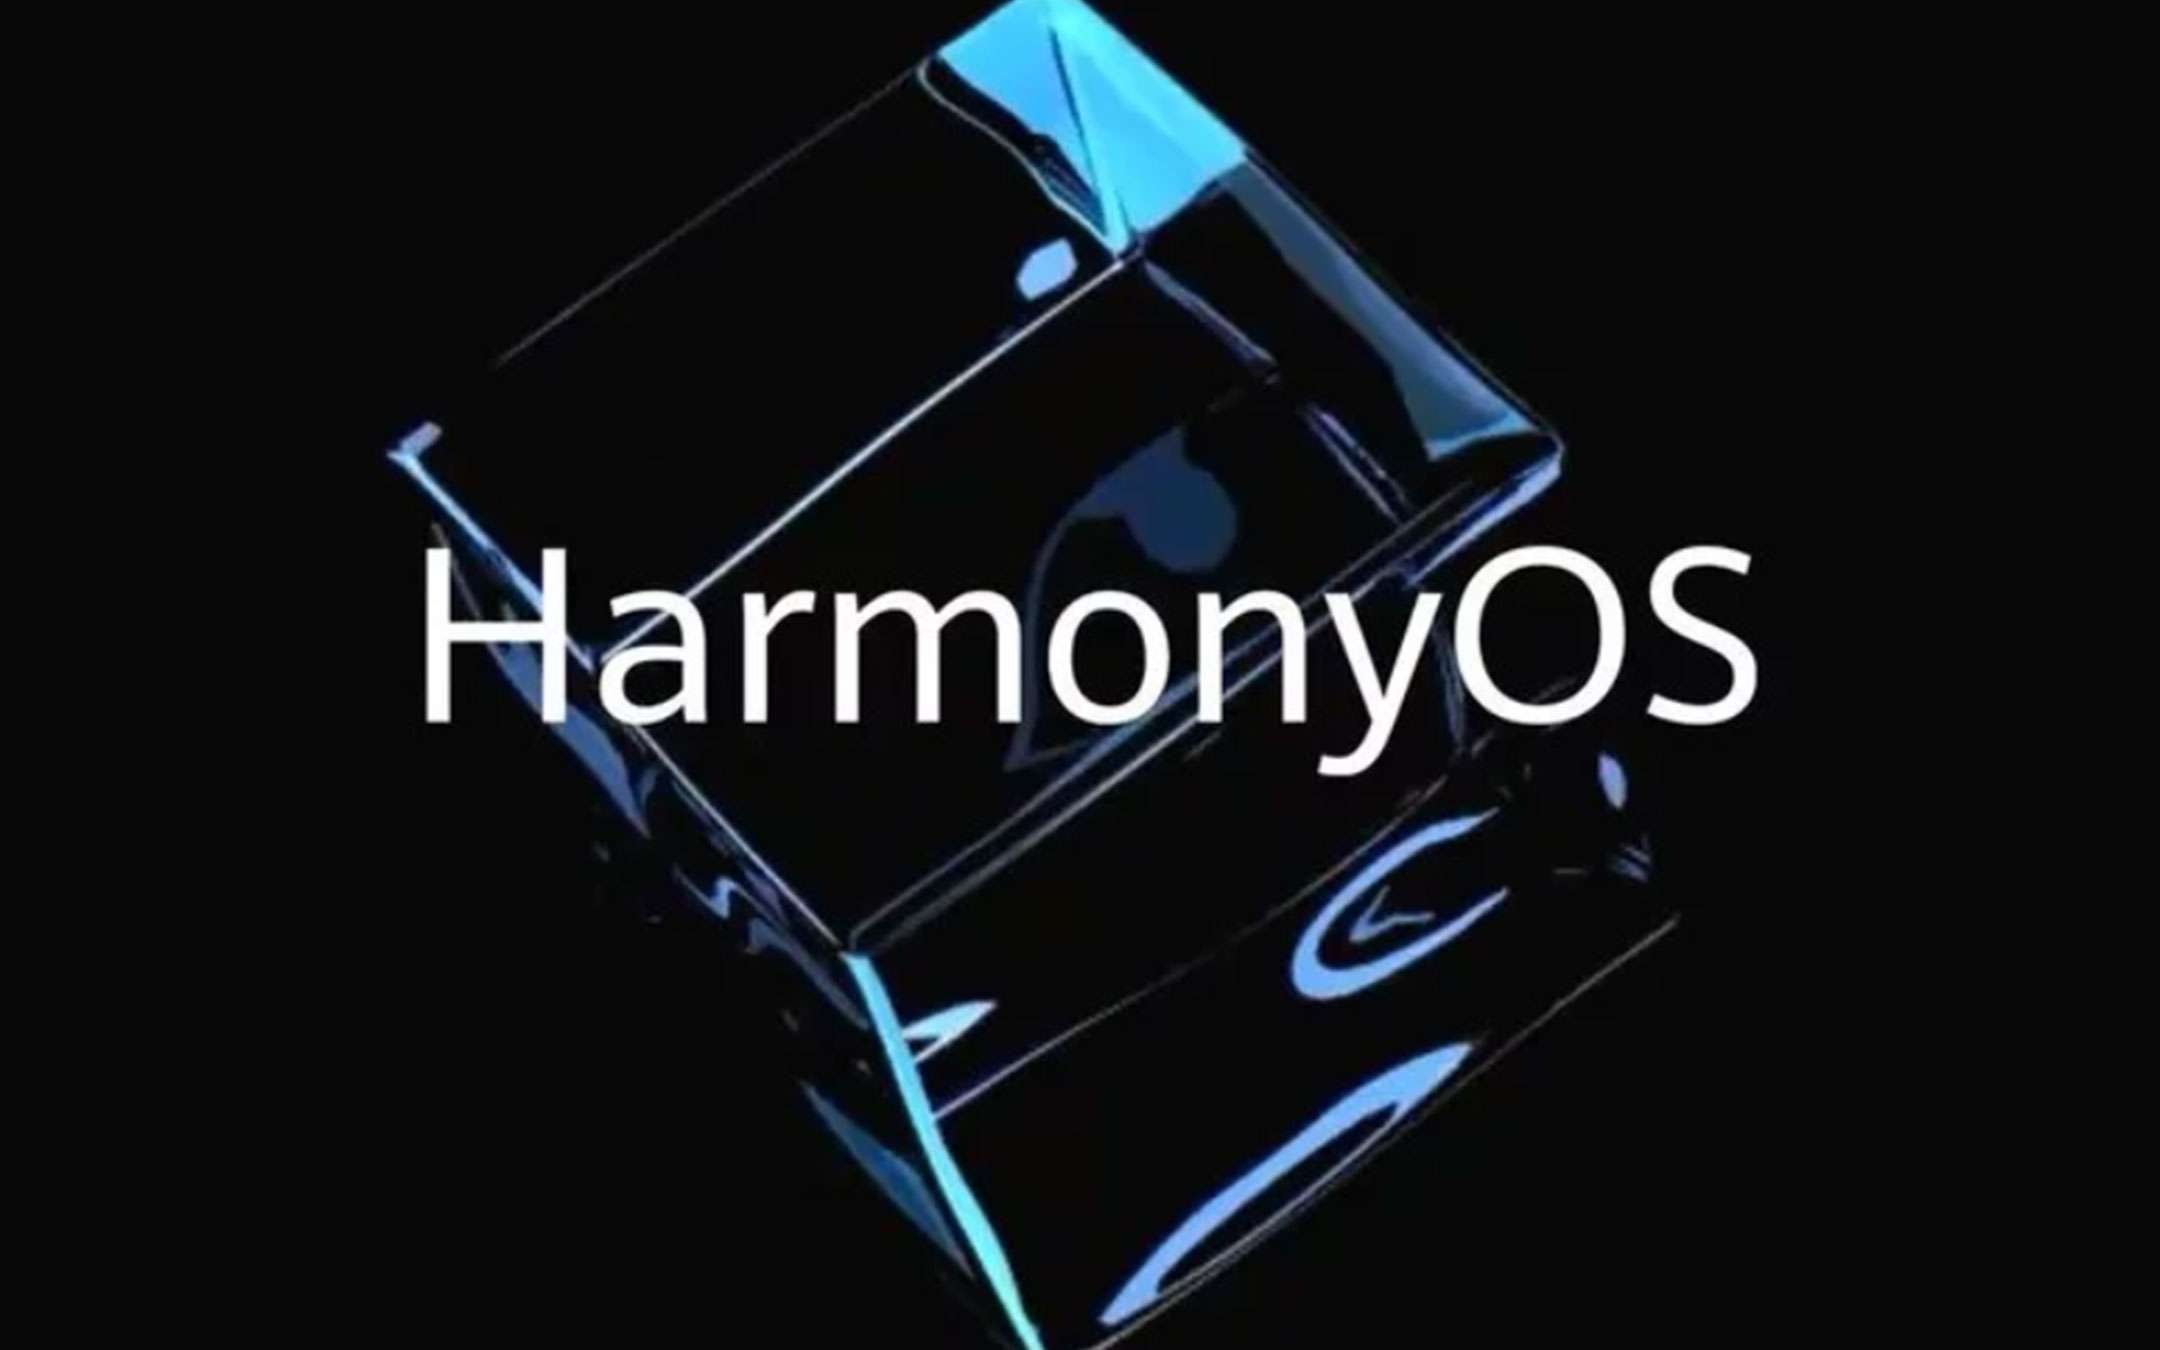 HarmonyOS arriva su smartphone Huawei nel 2020